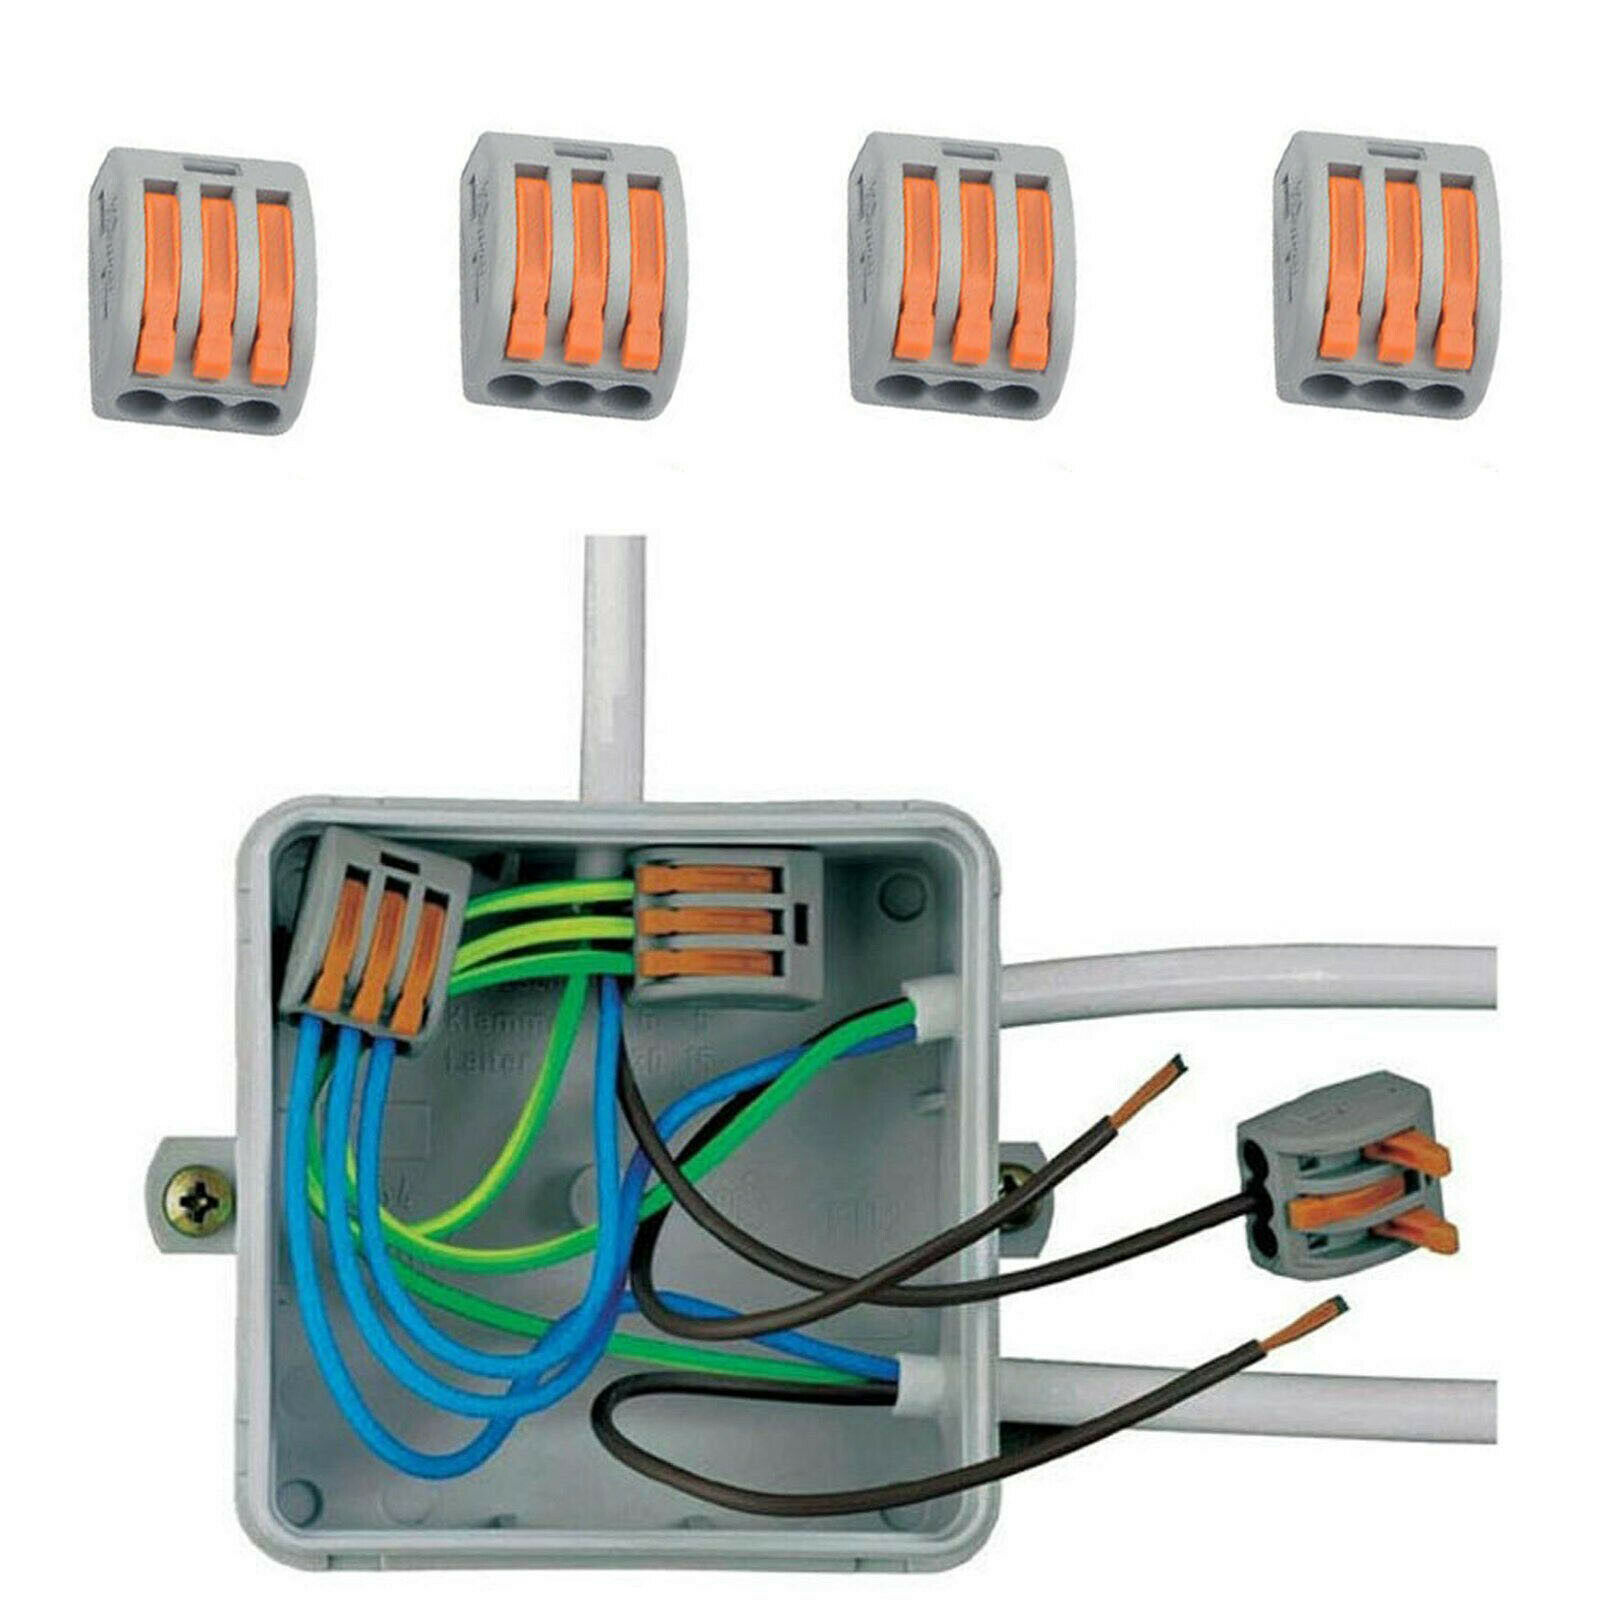 10/Anschlussblöcke PCT212-PCT218 SPL-2-3 0.08-2,5 mm universeller Kompakt-Elektrodrahtkabelanschlüsse Leitersplitter